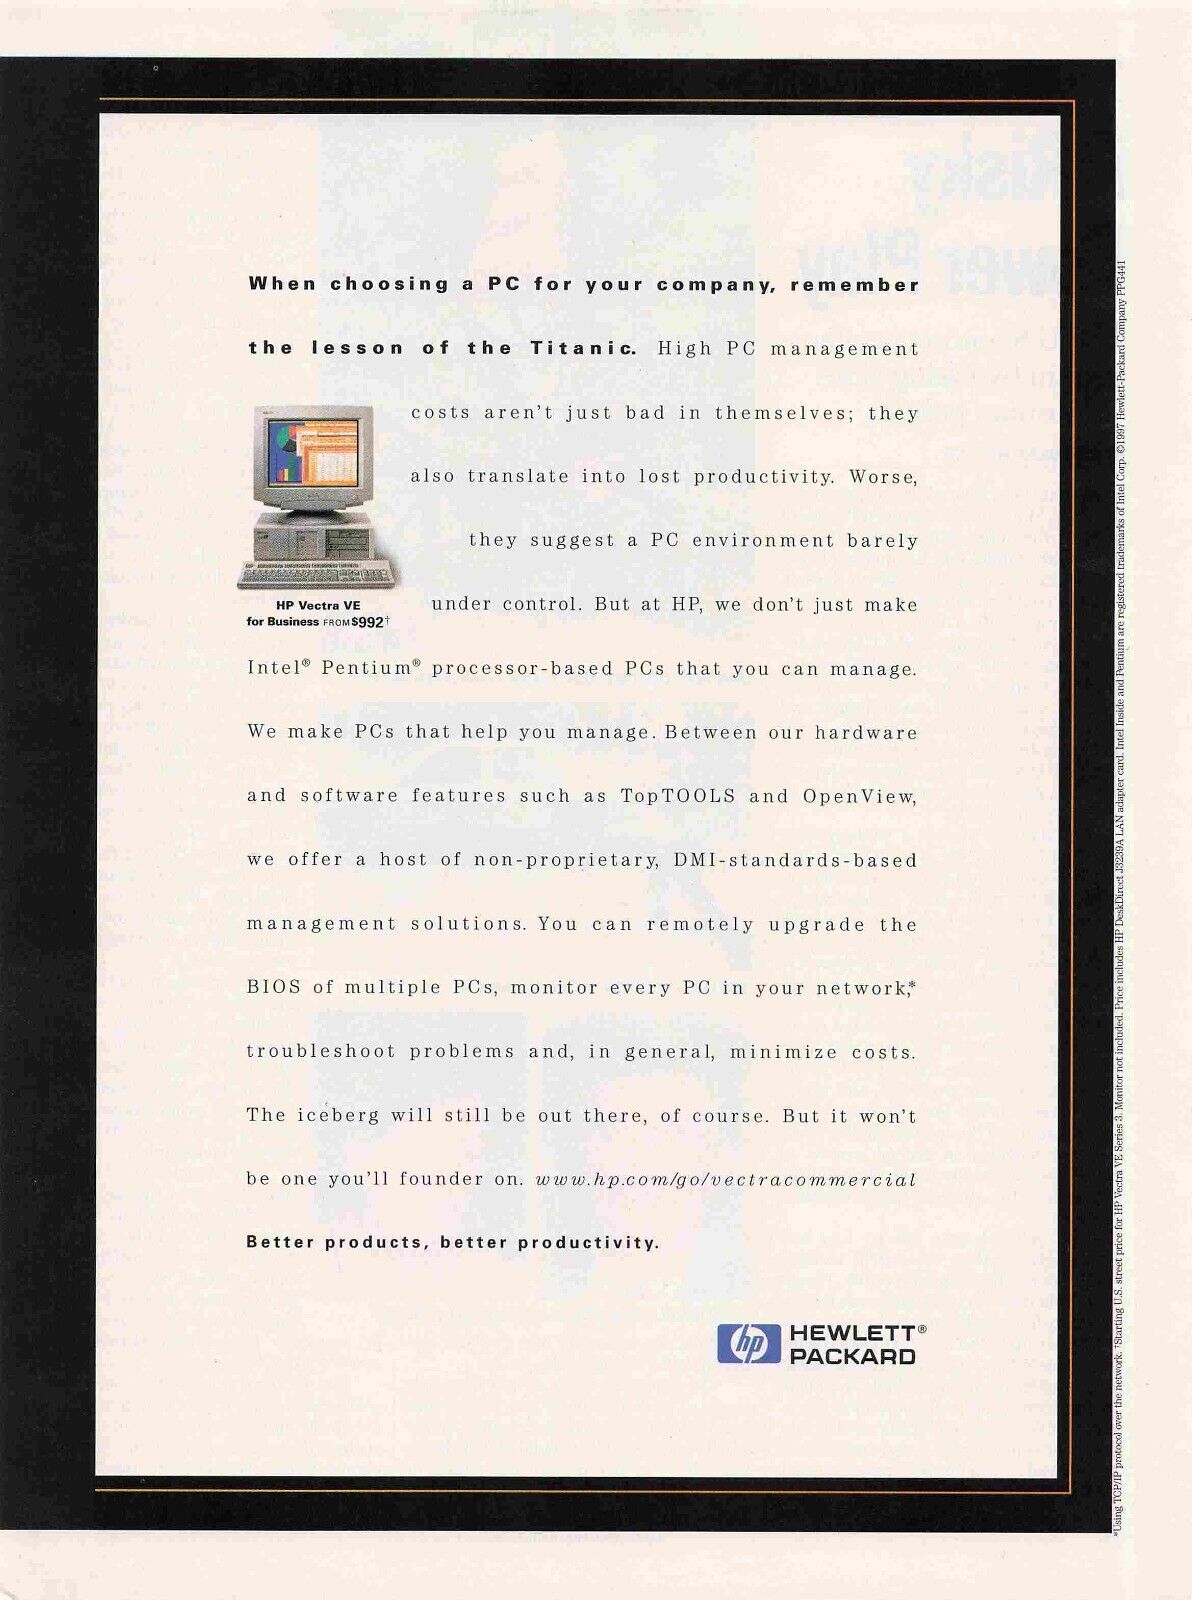 Hewlett Packard Hp Vectra Ve Computer Ad 1990S Vtg  Magazine Print Ad 8X11